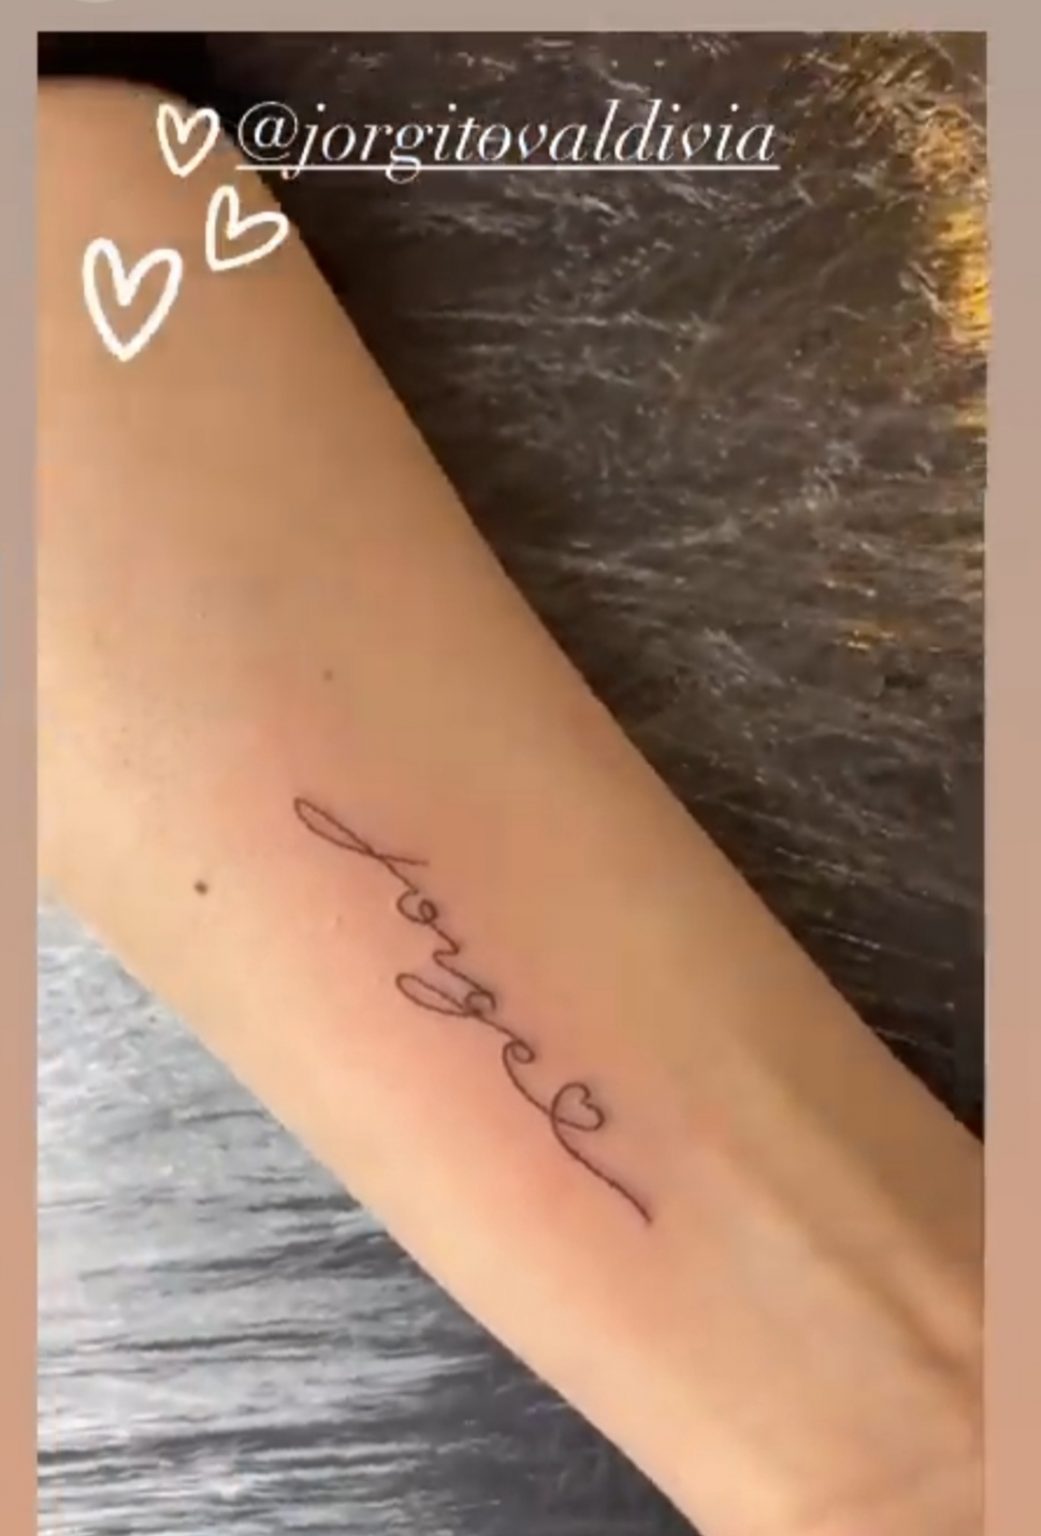 Tatuaje de Daniela a Jorge Valdivia